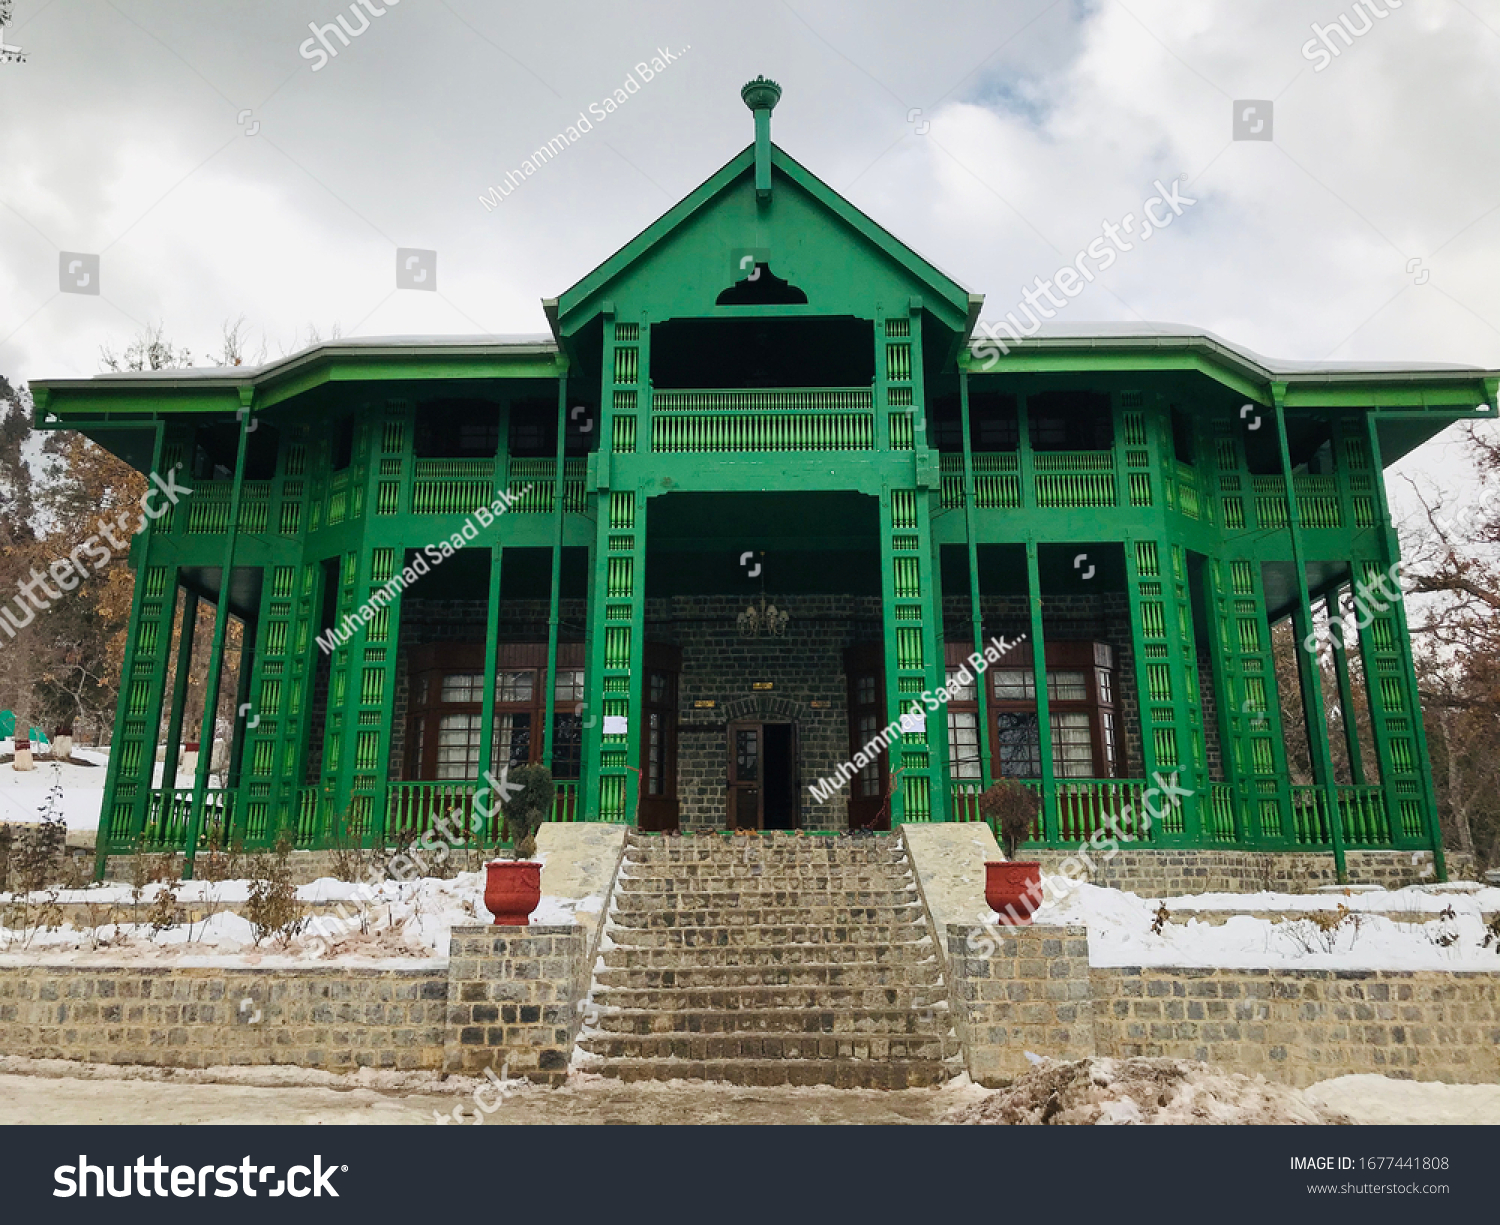 Image of Ziarat Residency / Quaid-e-Azam Residency Situated in Ziarat Balochistan Pakistan #1677441808